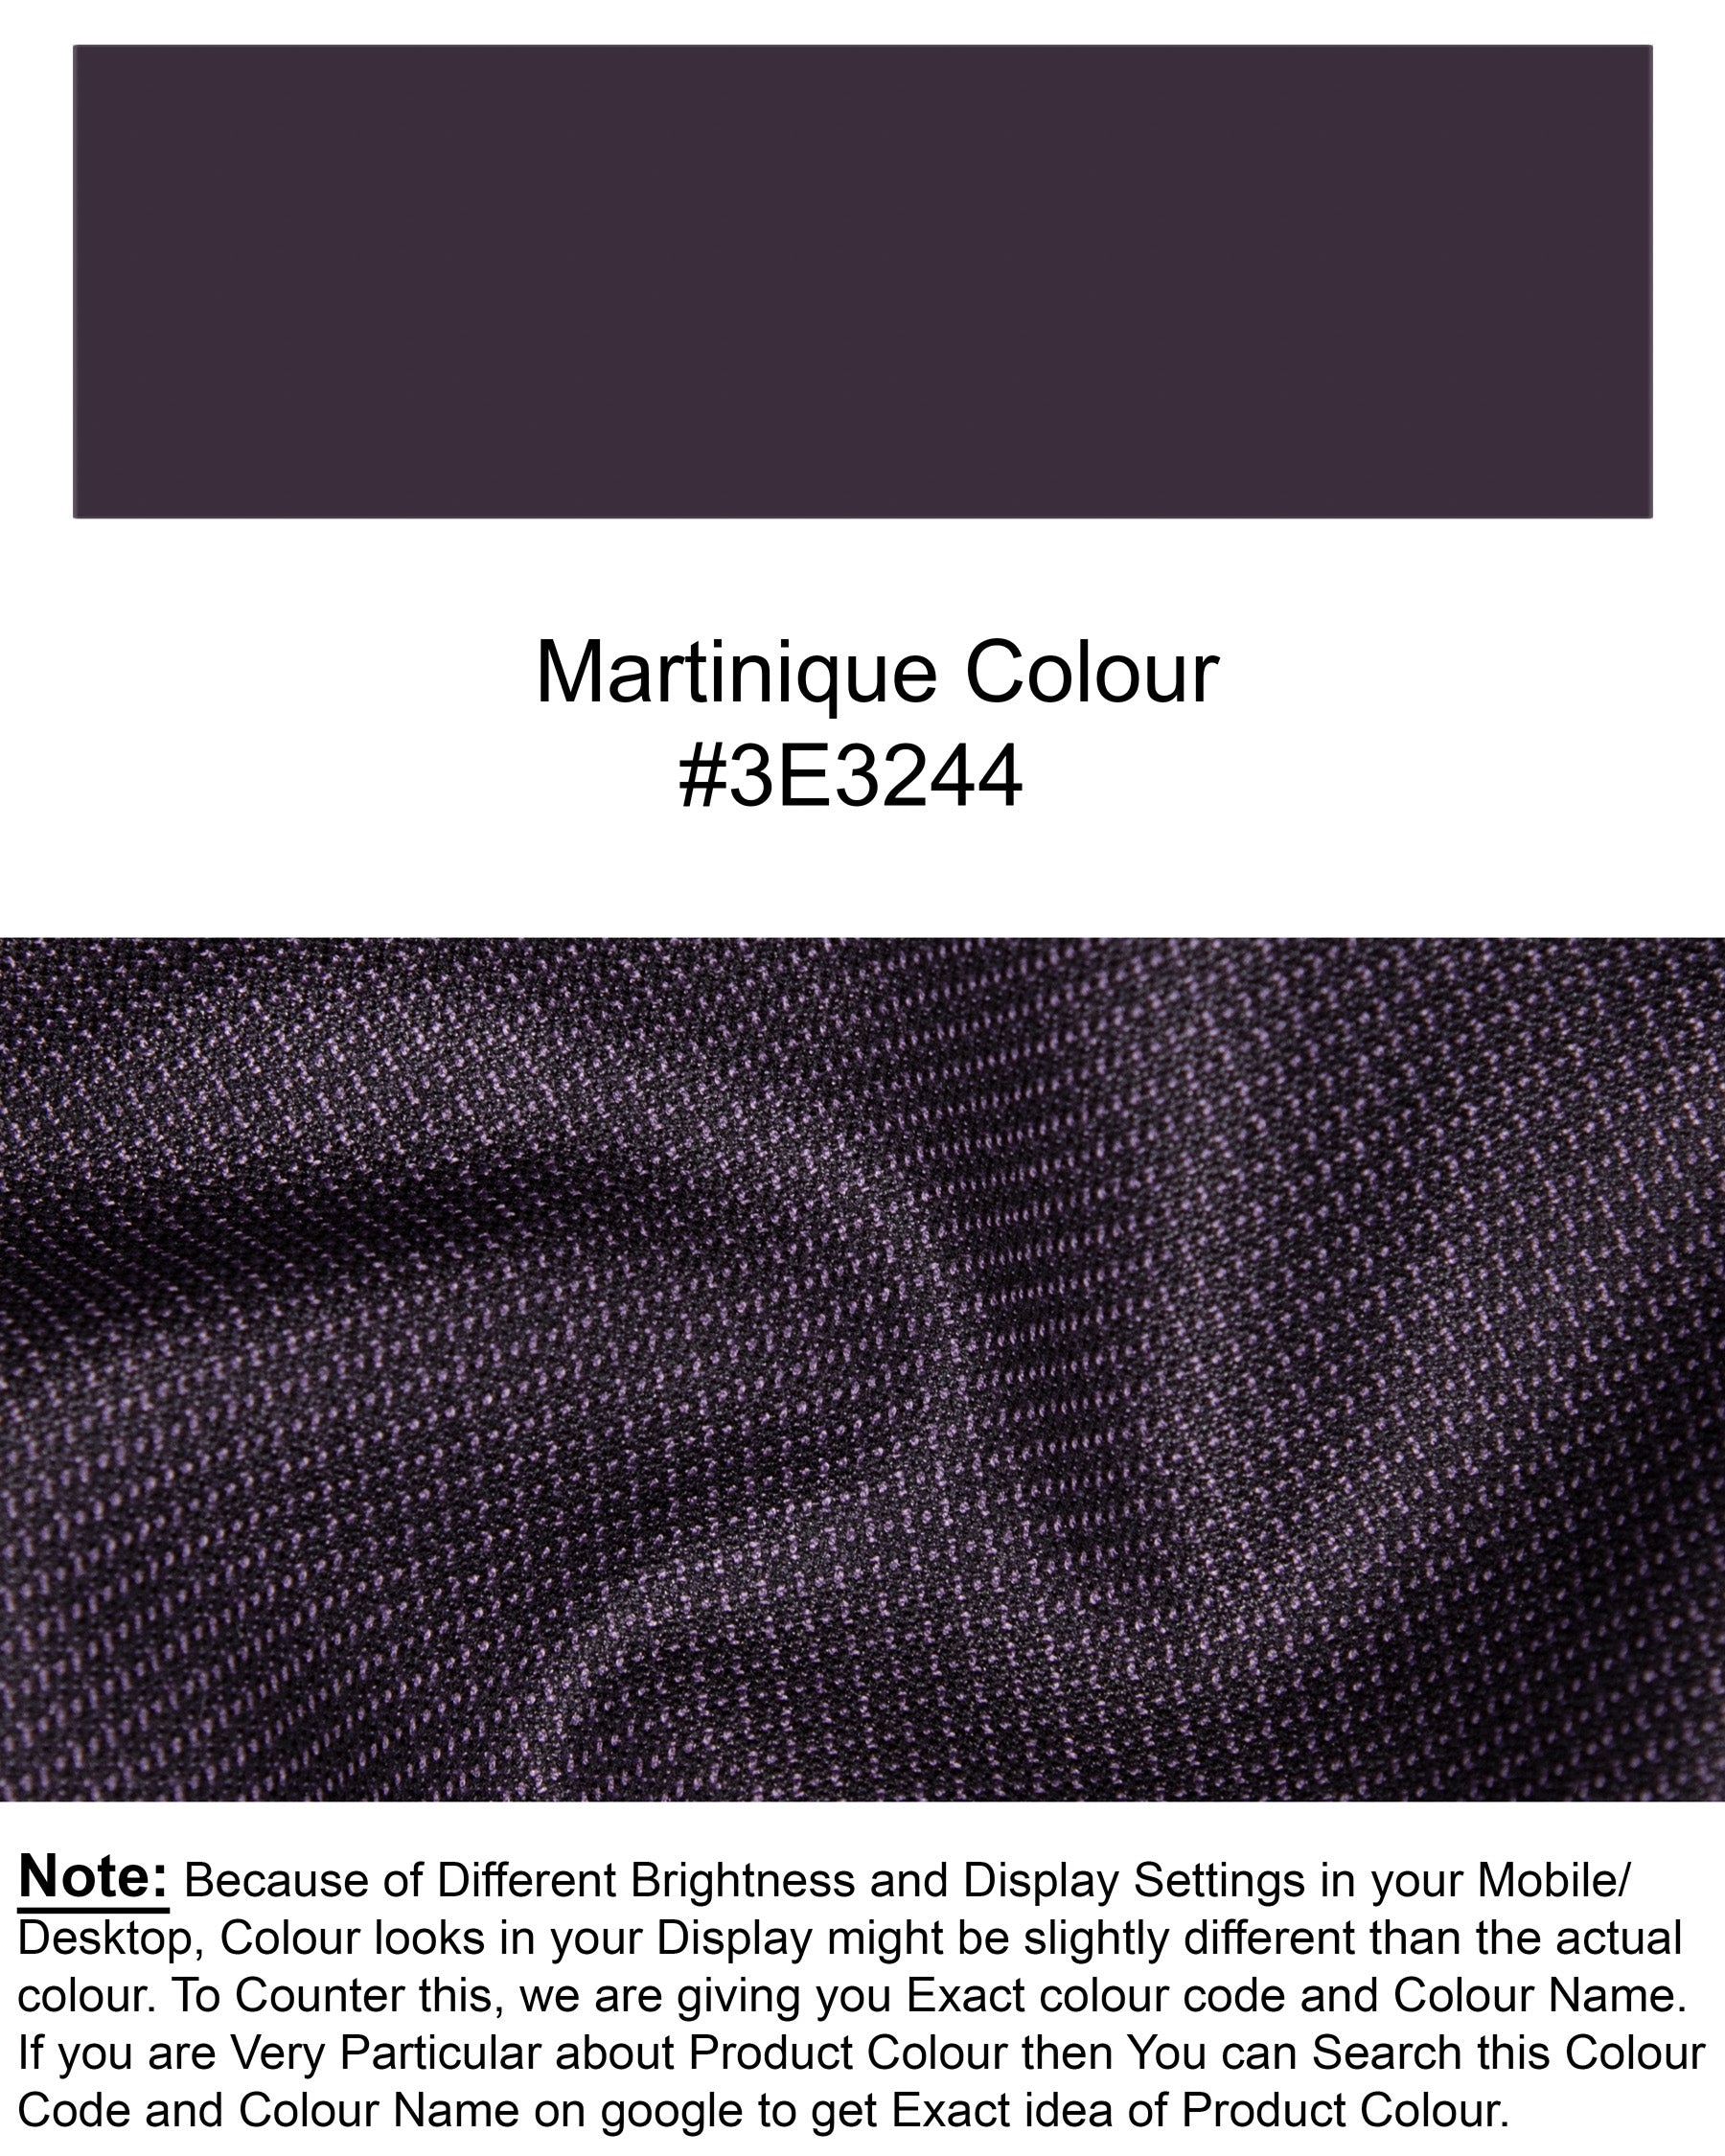 Martinique Violet Subtle Checked Woolrich Waistcoat V1274-40, V1274-42, V1274-44, V1274-46, V1274-48, V1274-50, V1274-52, V1274-36, V1274-38, V1274-54, V1274-56, V1274-58, V1274-60